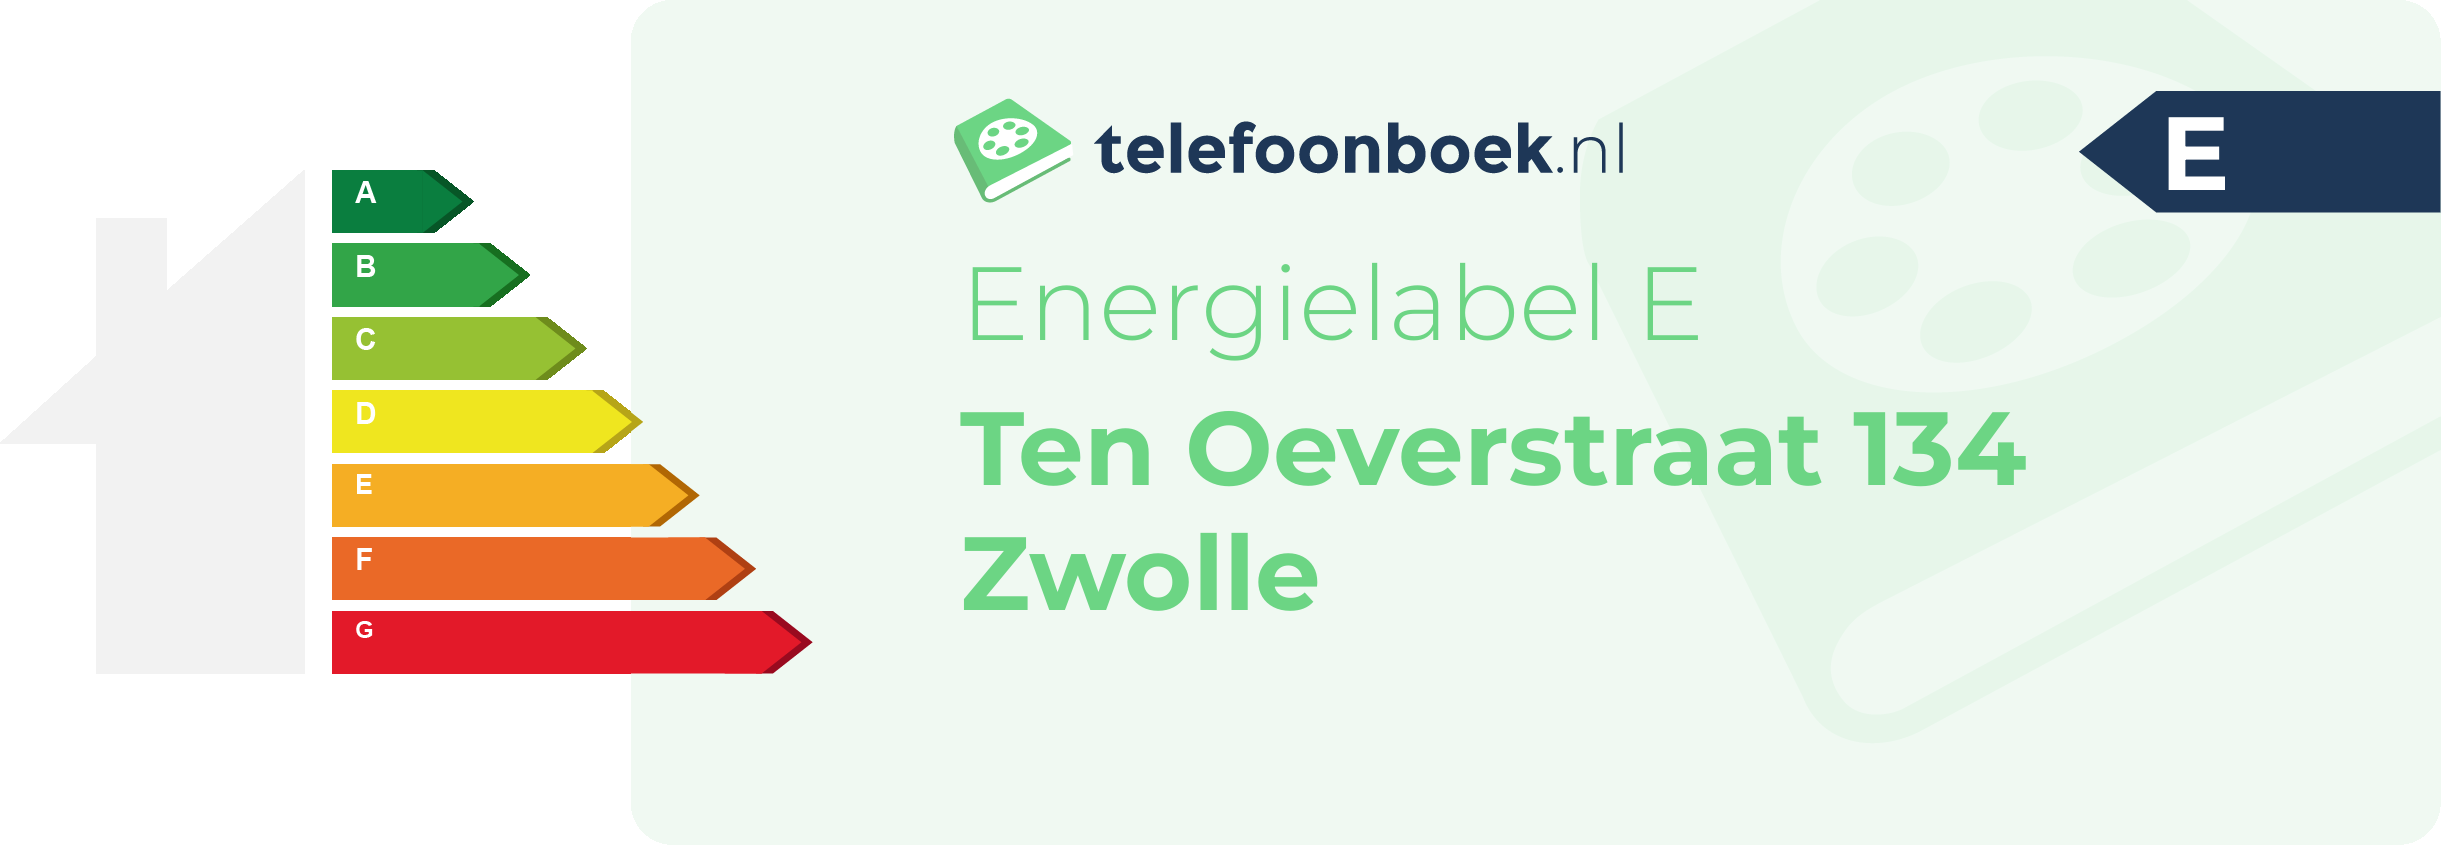 Energielabel Ten Oeverstraat 134 Zwolle